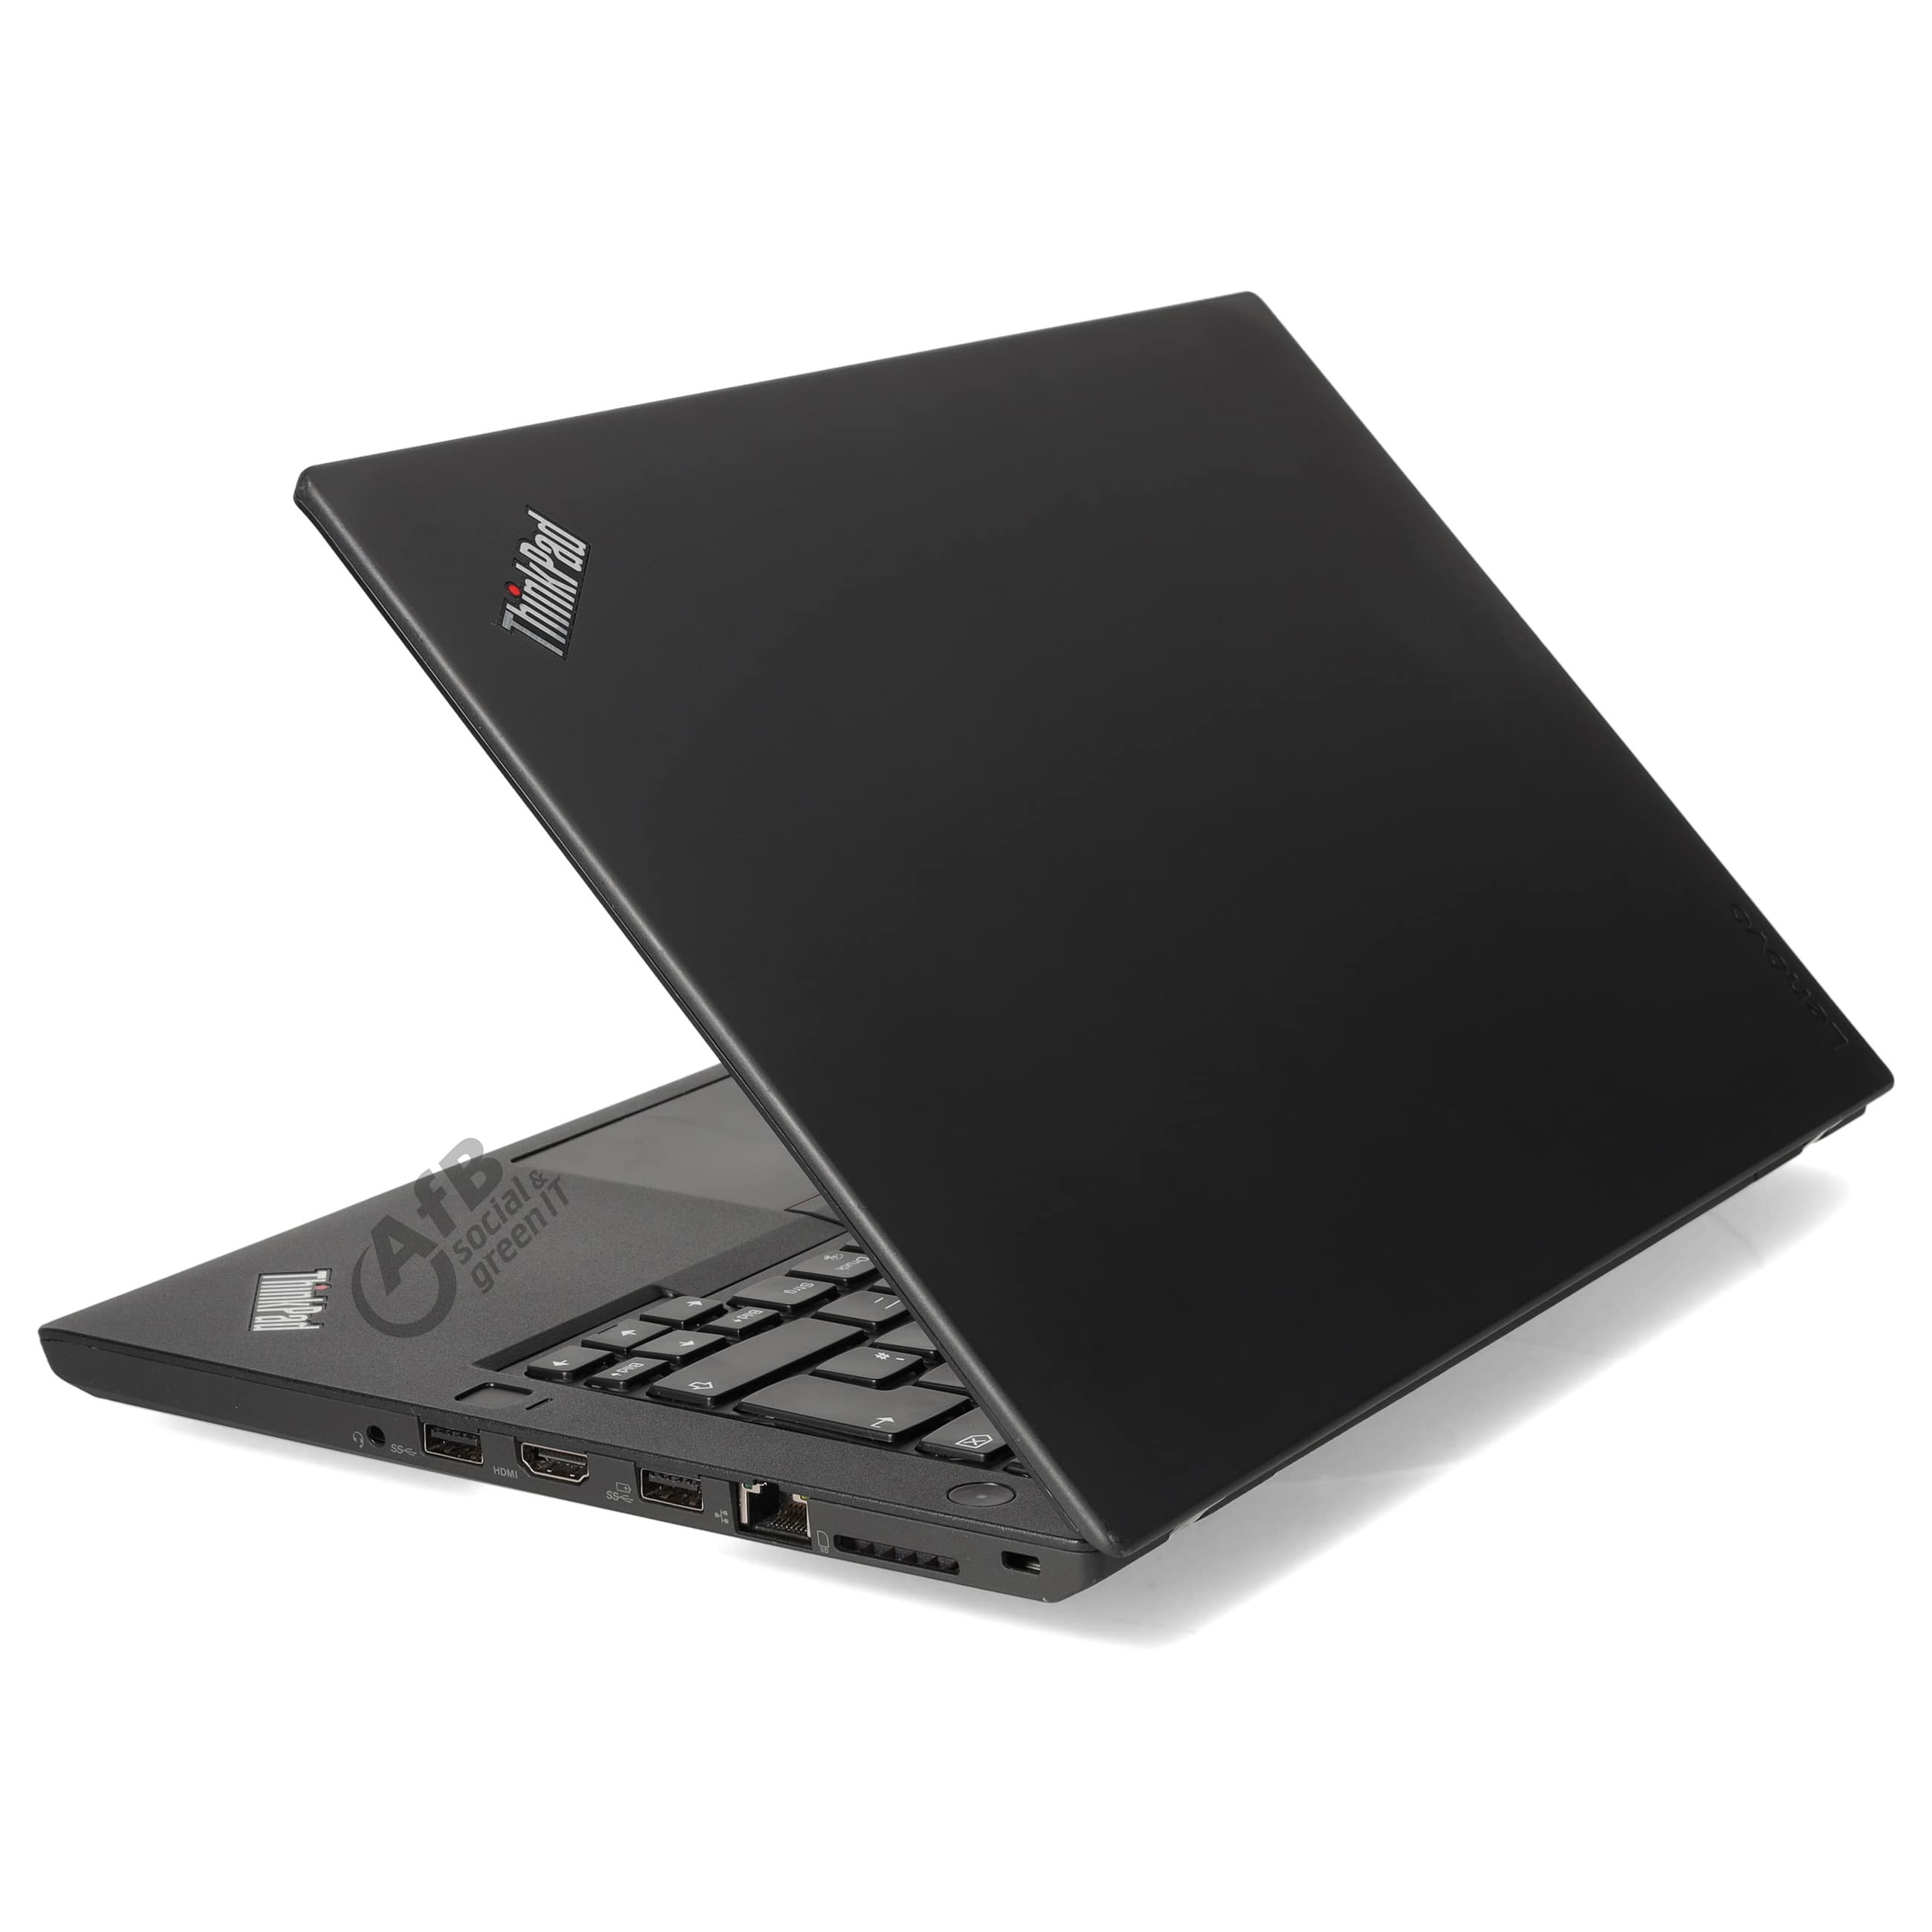 Lenovo ThinkPad T480 

 - 14,0 Zoll - Intel Core i5 8350U @ 1,7 GHz - 8 GB DDR4 - 500 GB SSD - 1920 x 1080 FHD - Windows 10 Professional